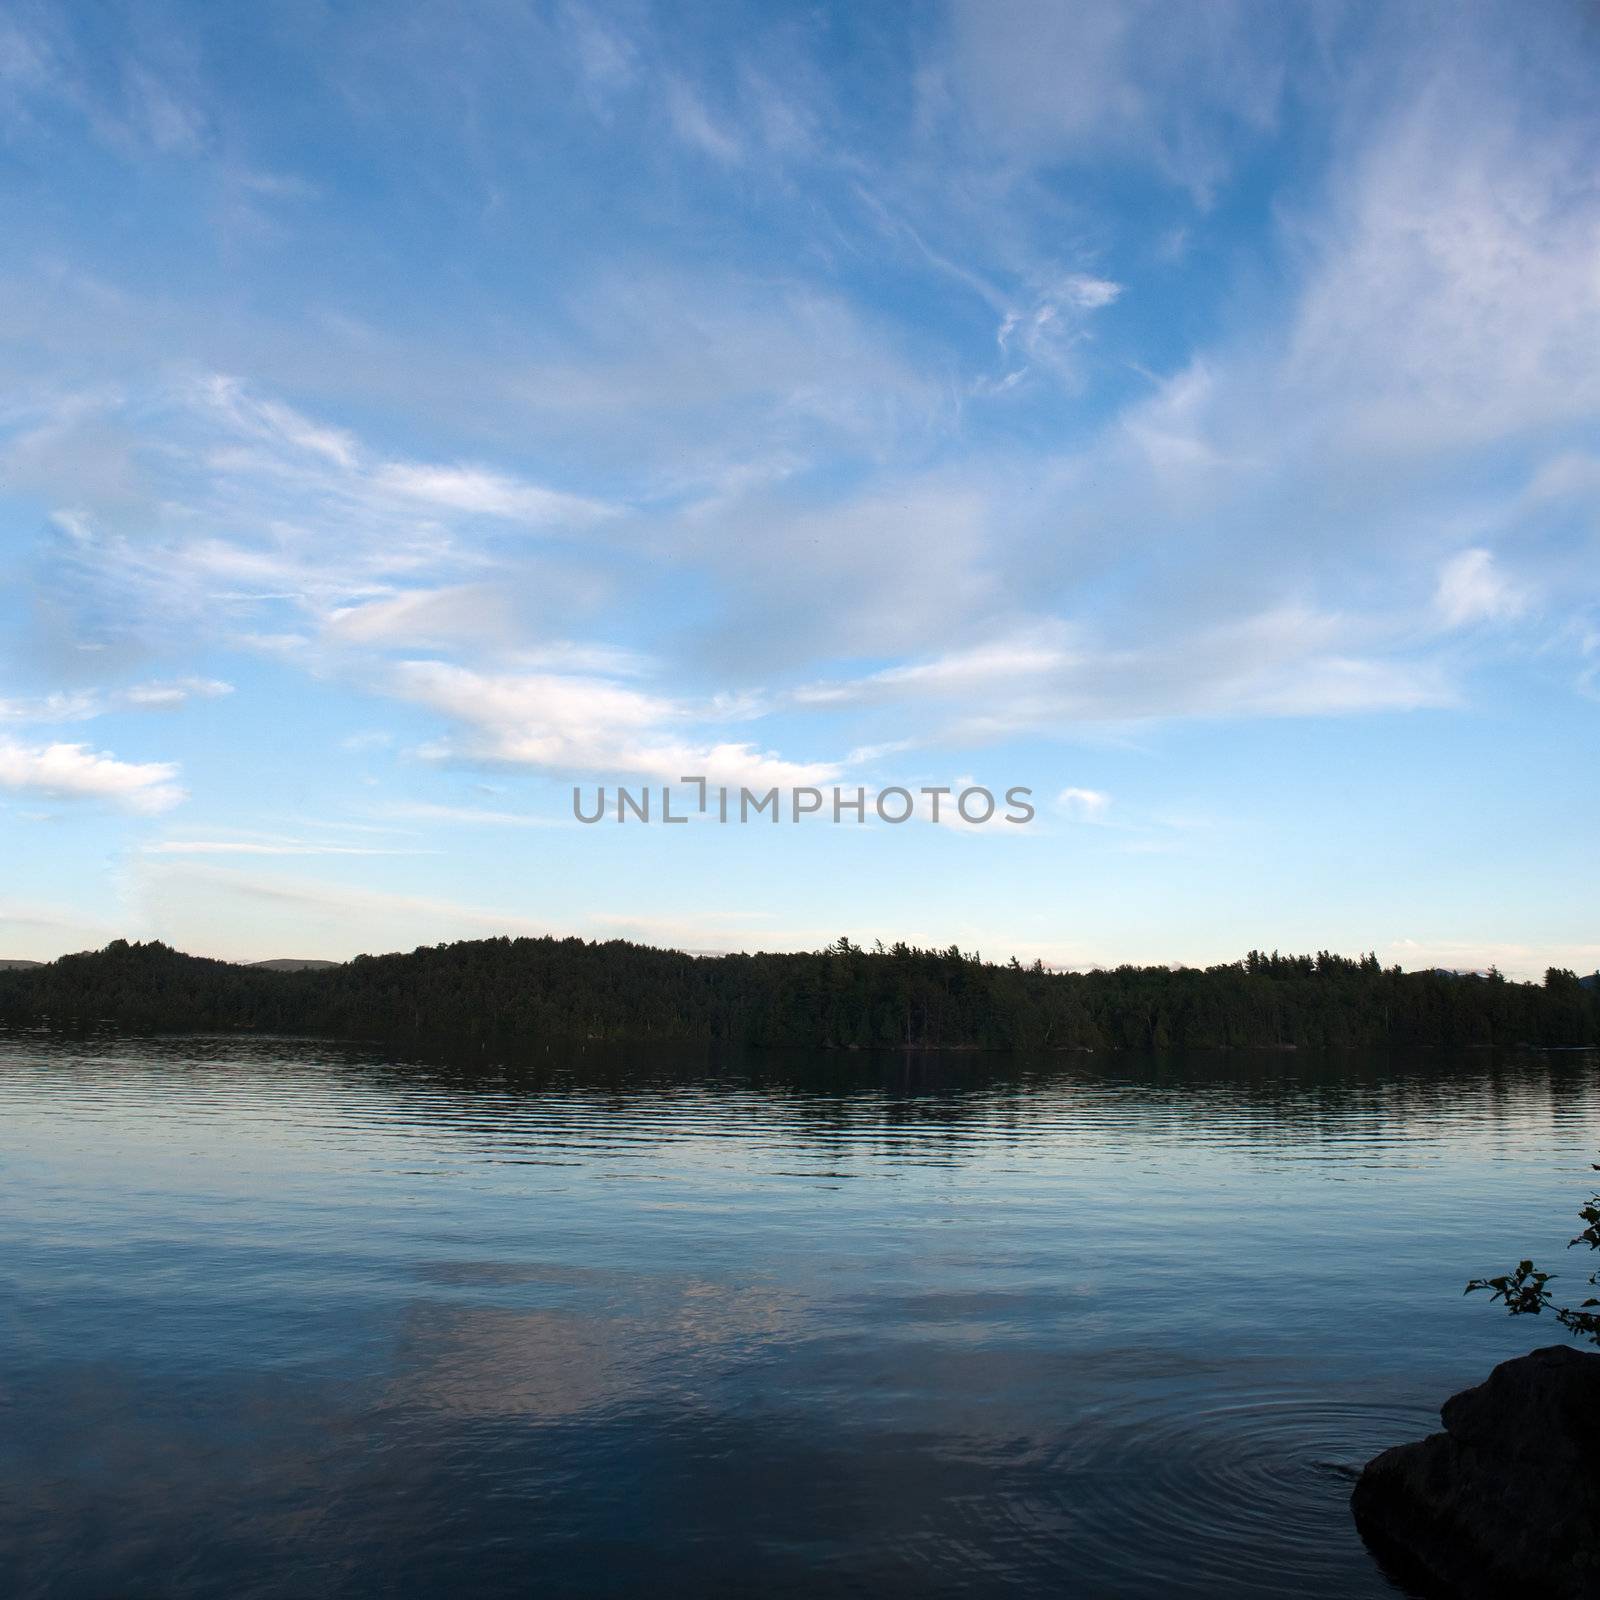 A view of lower Saranac Lake and islands located in the upstate New York Adirondacks around dusk.